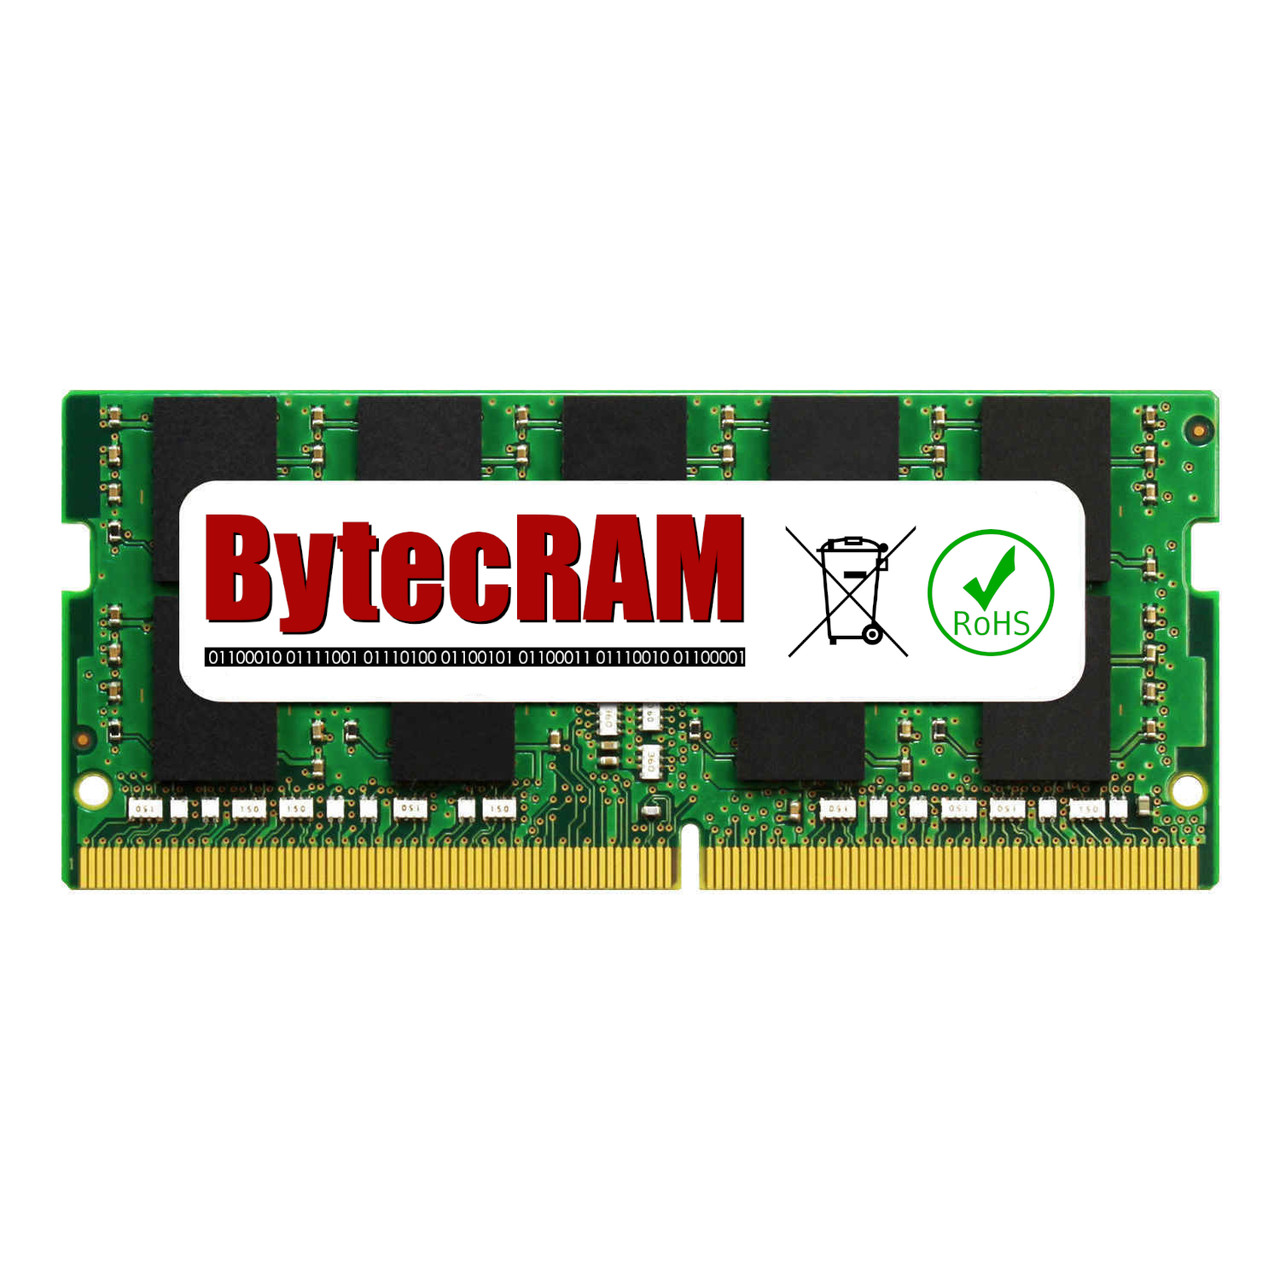 eBay*16GB 260-pin BytecRAM DDR4-2666 PC4-21300 ECC Sodimm (2Rx8) Memory